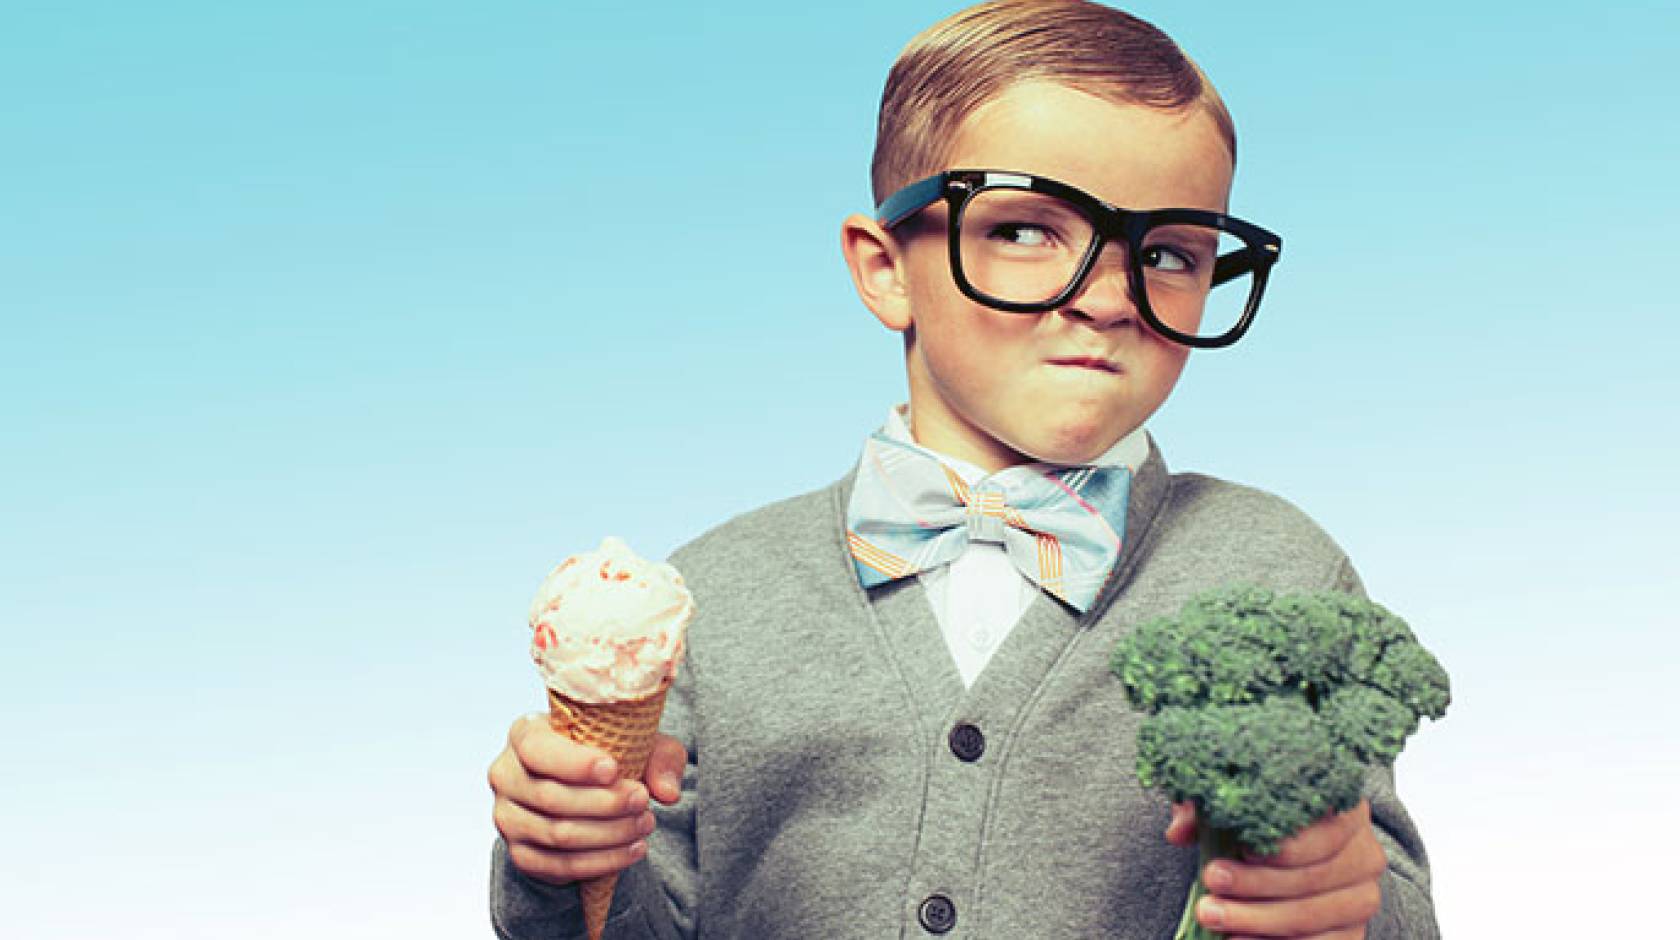 Mischievous boy holds ice cream and broccoli